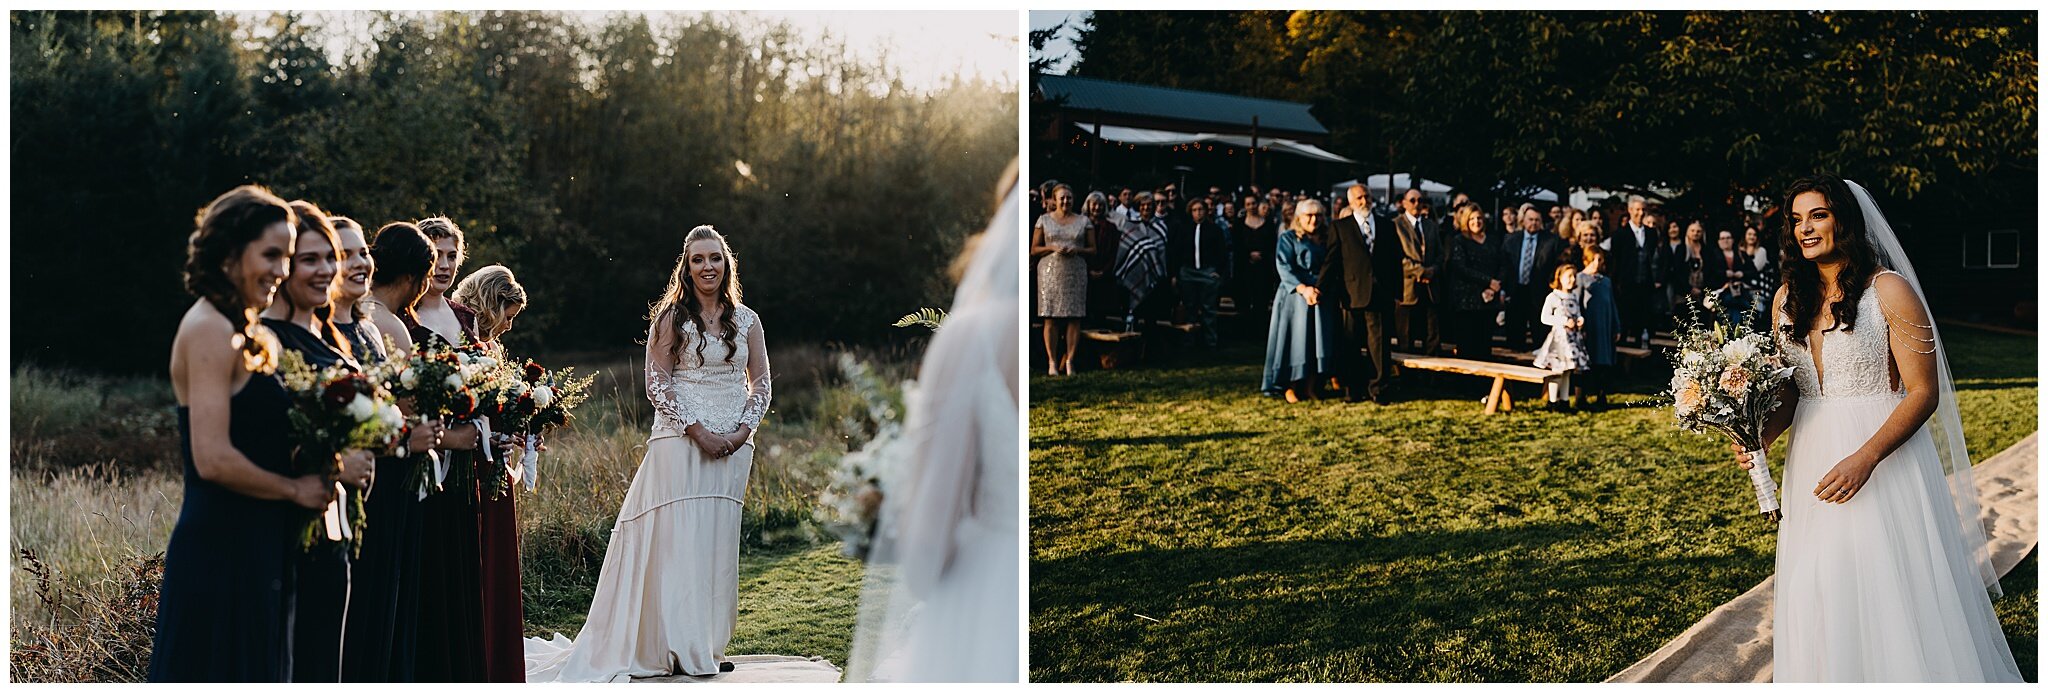 winlock-washington-backyard-wedding-ana-carly-jamie-buckley-photography-48.jpg